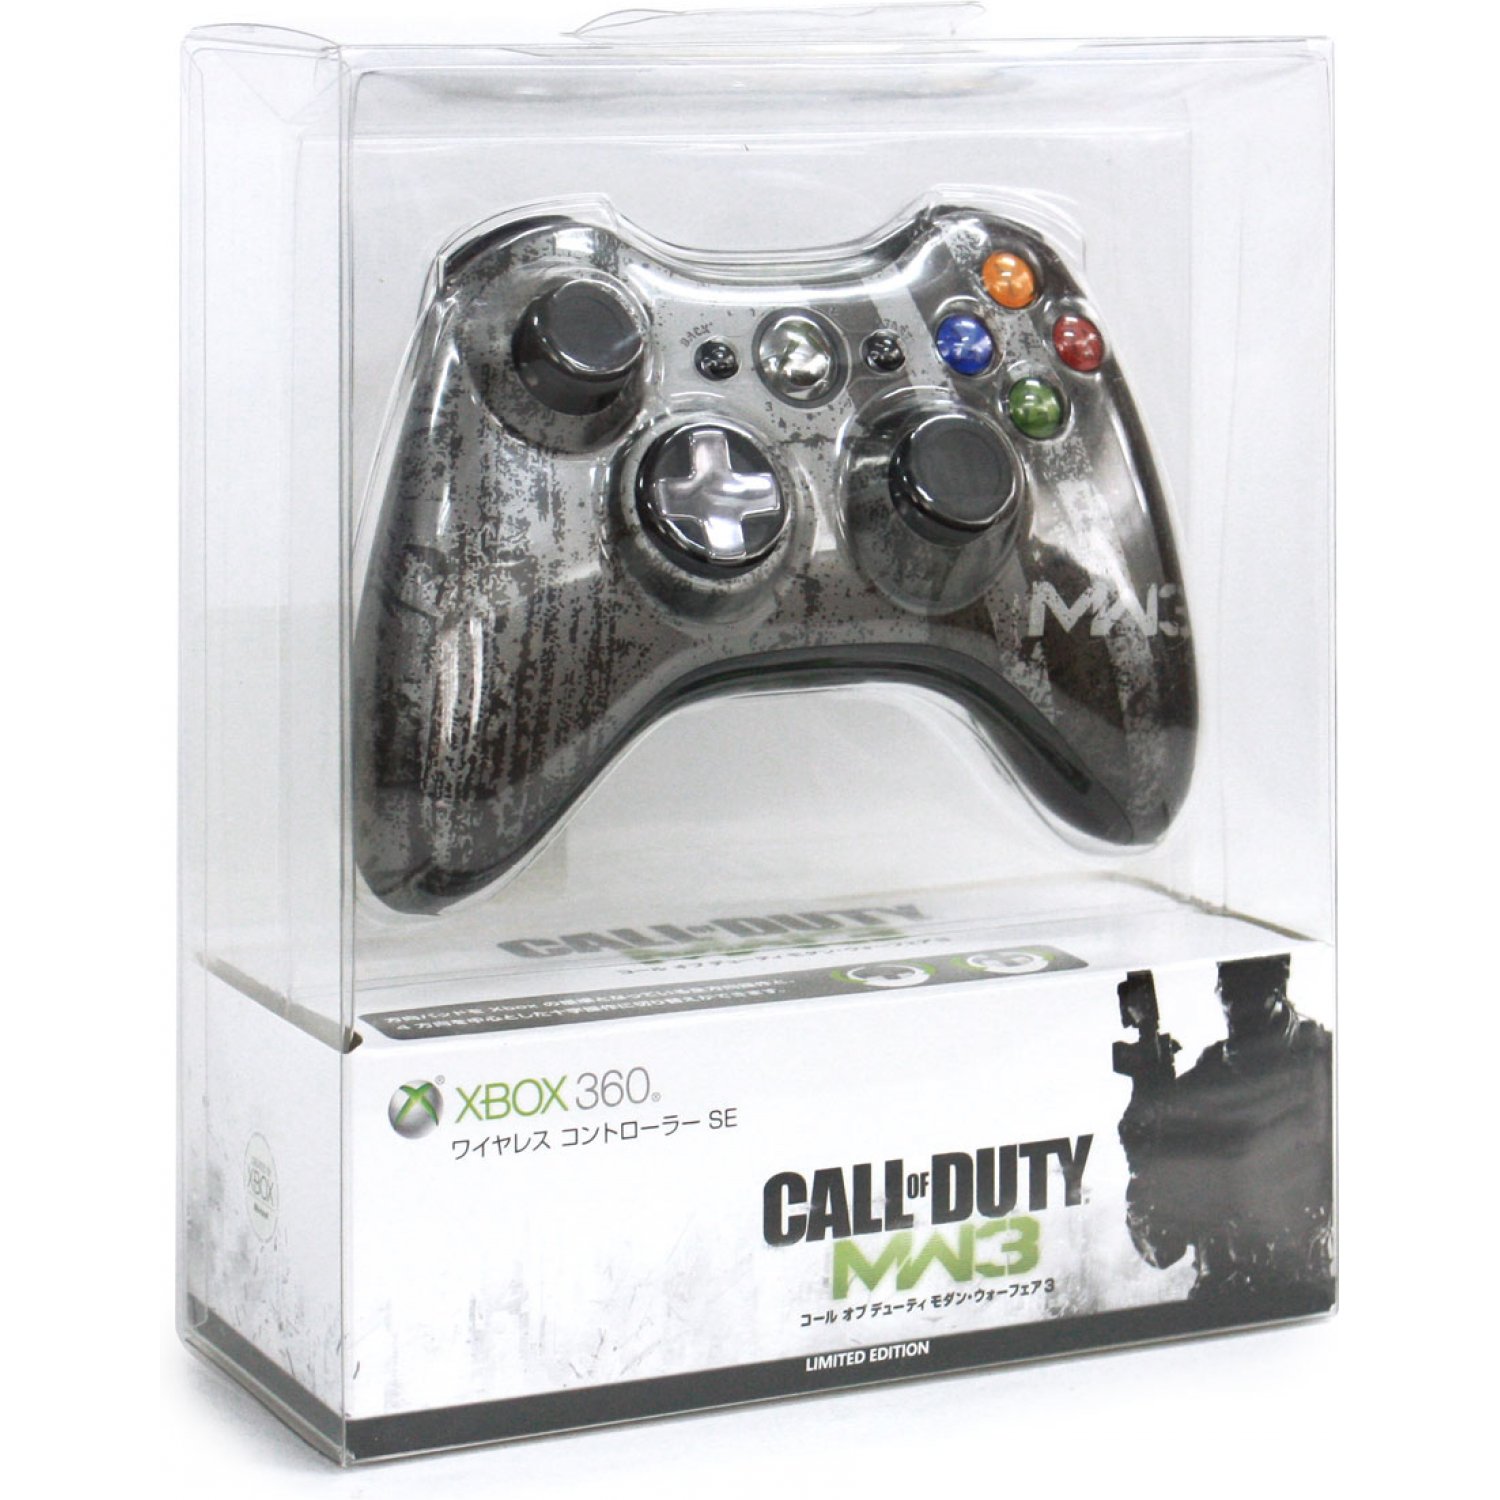 Xbox 360 Wireless Controller Call of Duty Modern Warfare 3 Limited Edition